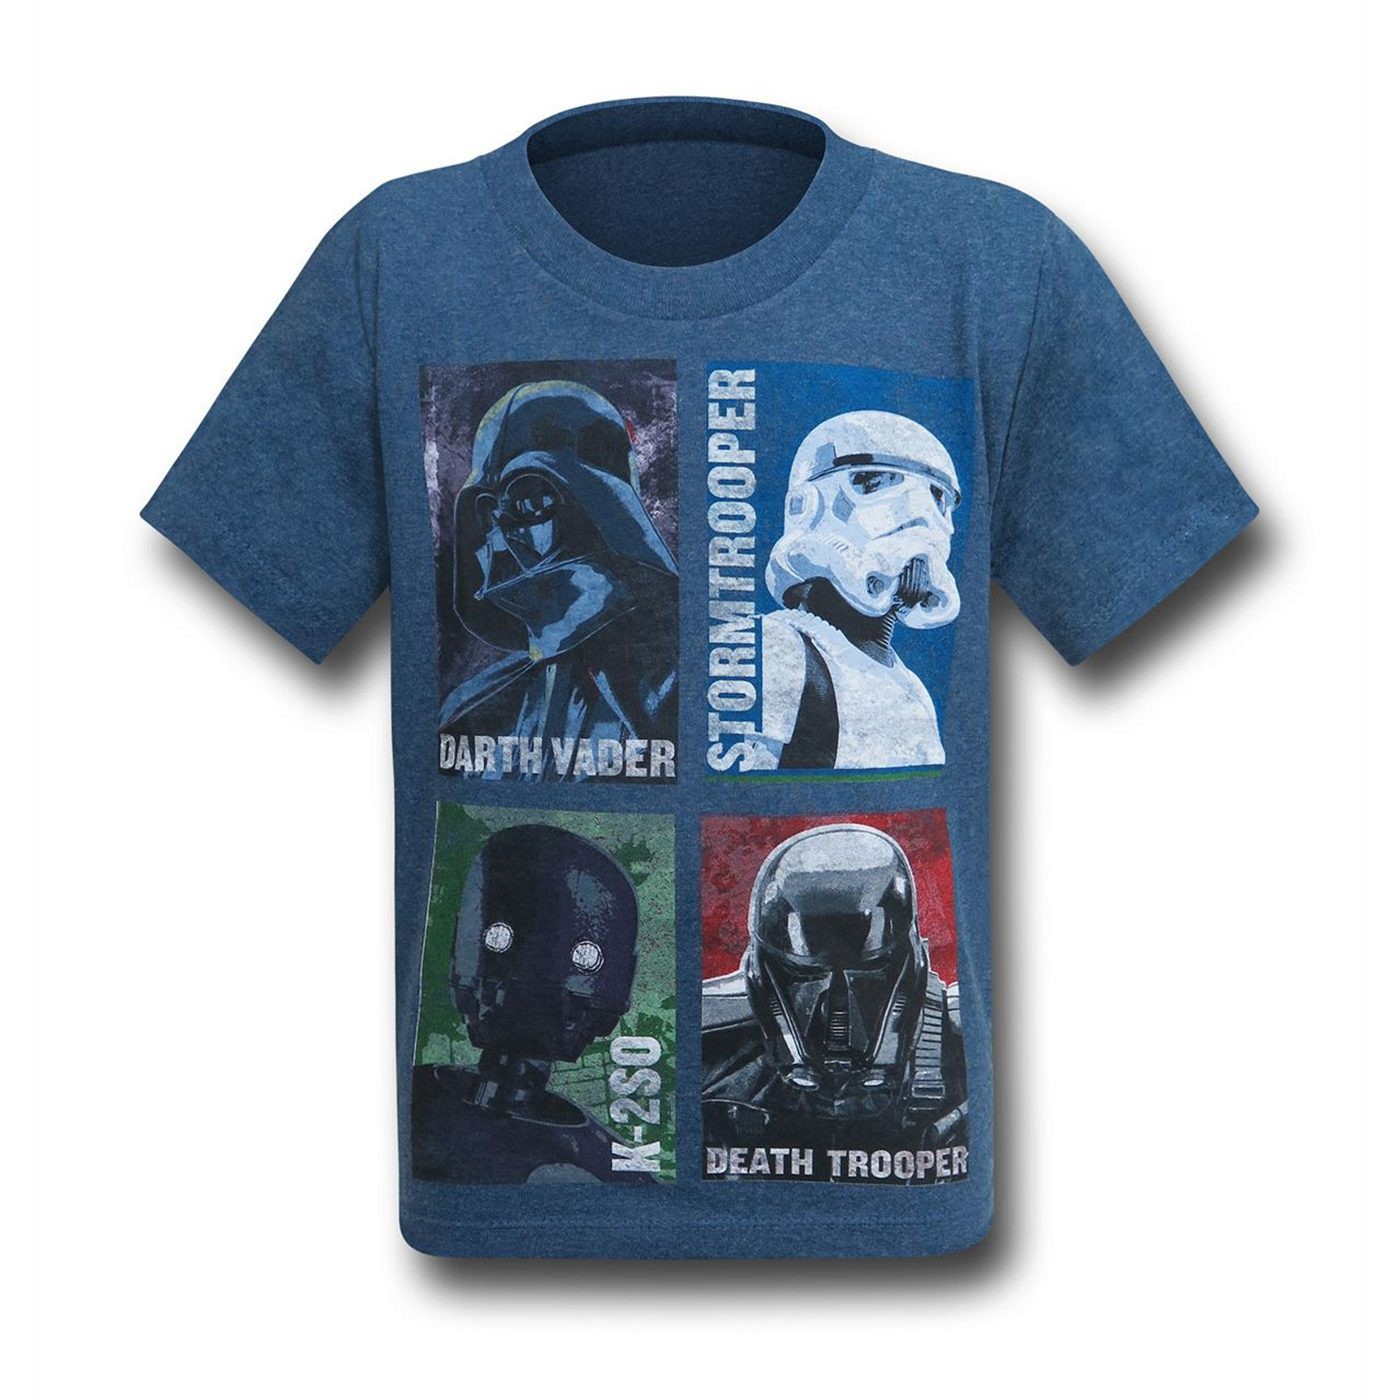 Star Wars Rogue One Best Crew Kids T-Shirt